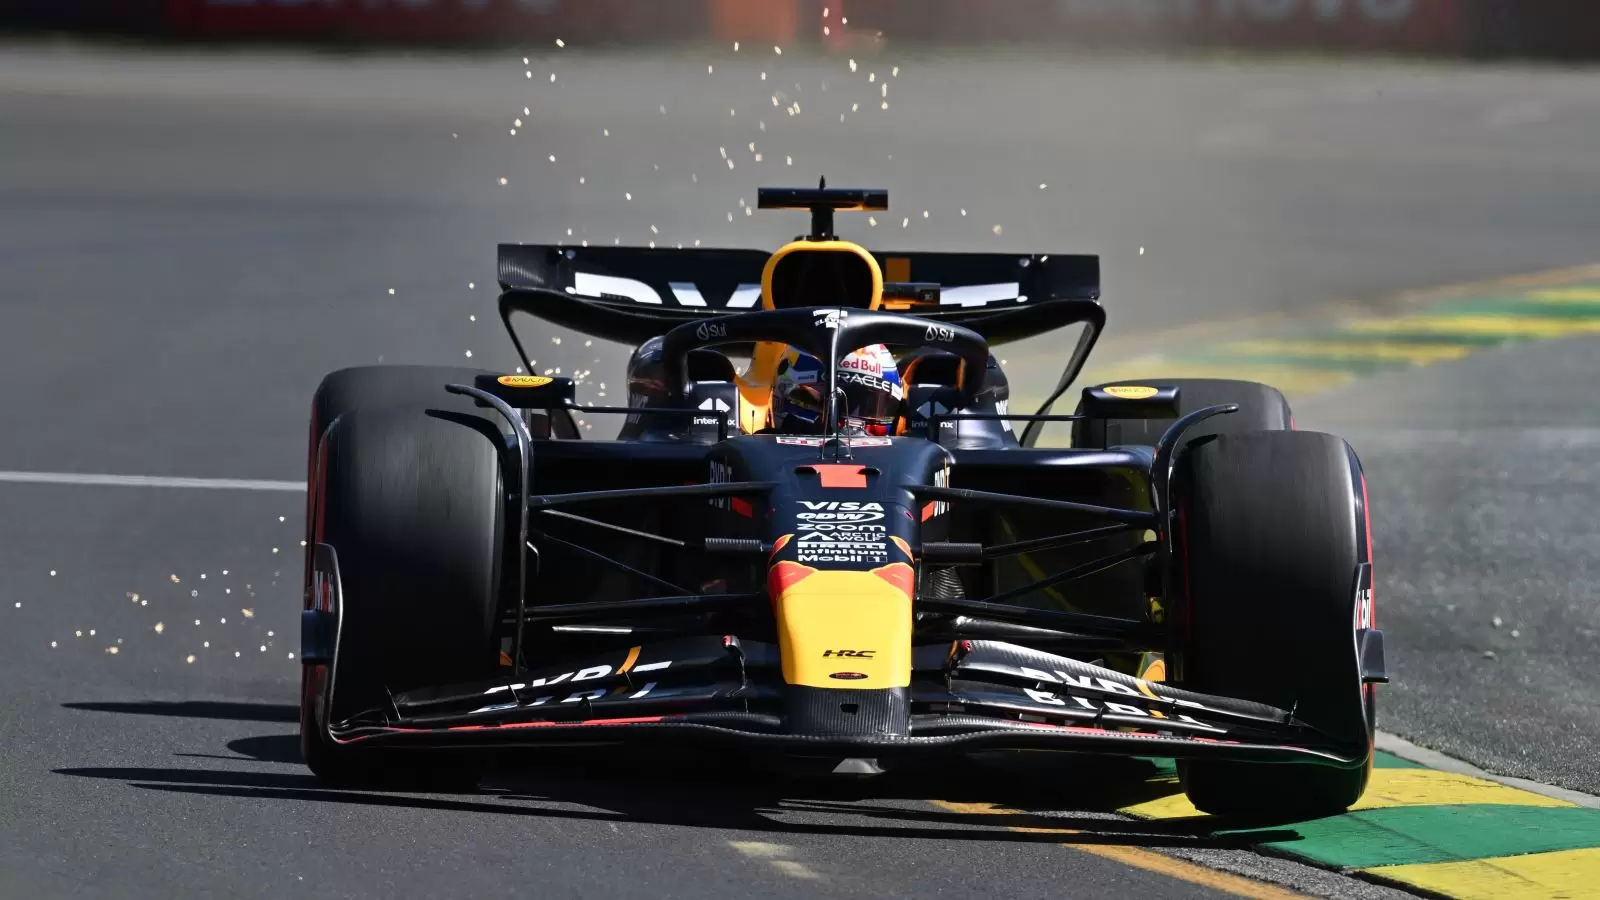 Verstappen tjetër “pole position”, Sainz i dyti dy javë pas operacionit, zhgënjen Mercedes